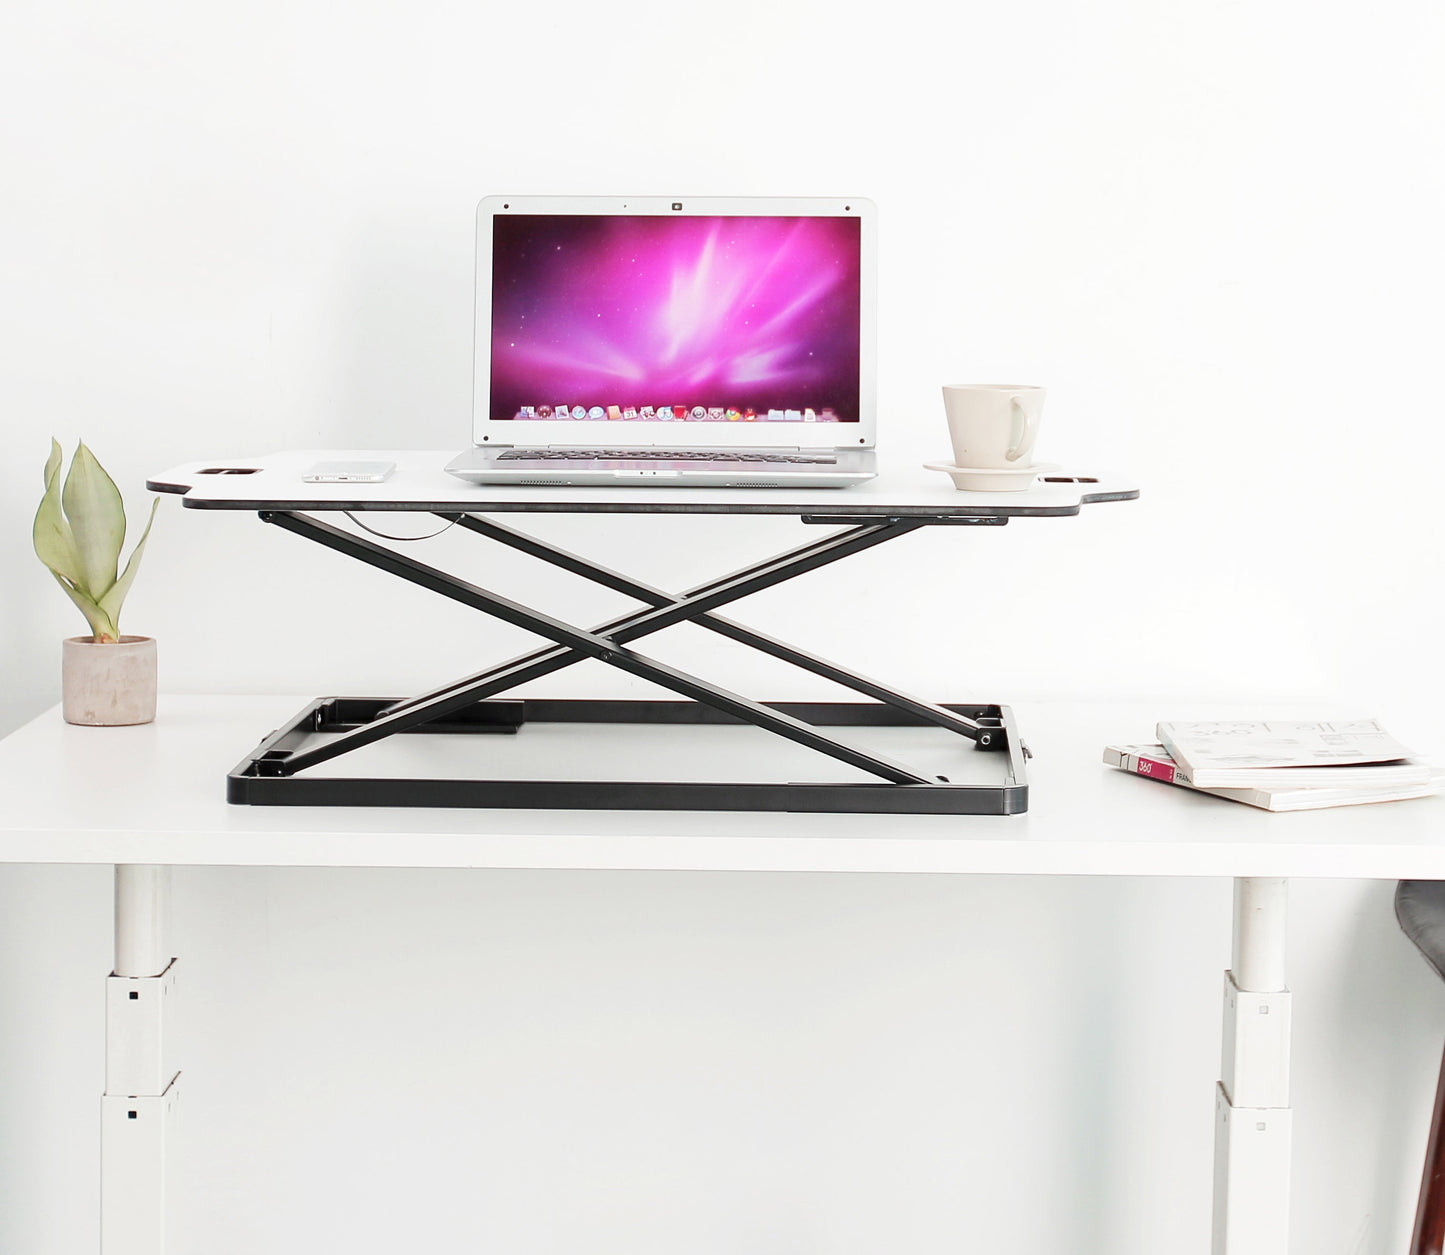 ProperAV Slim Profile Adjustable Stand Up Desk Workstation with 6 Height Settings - White - maplin.co.uk